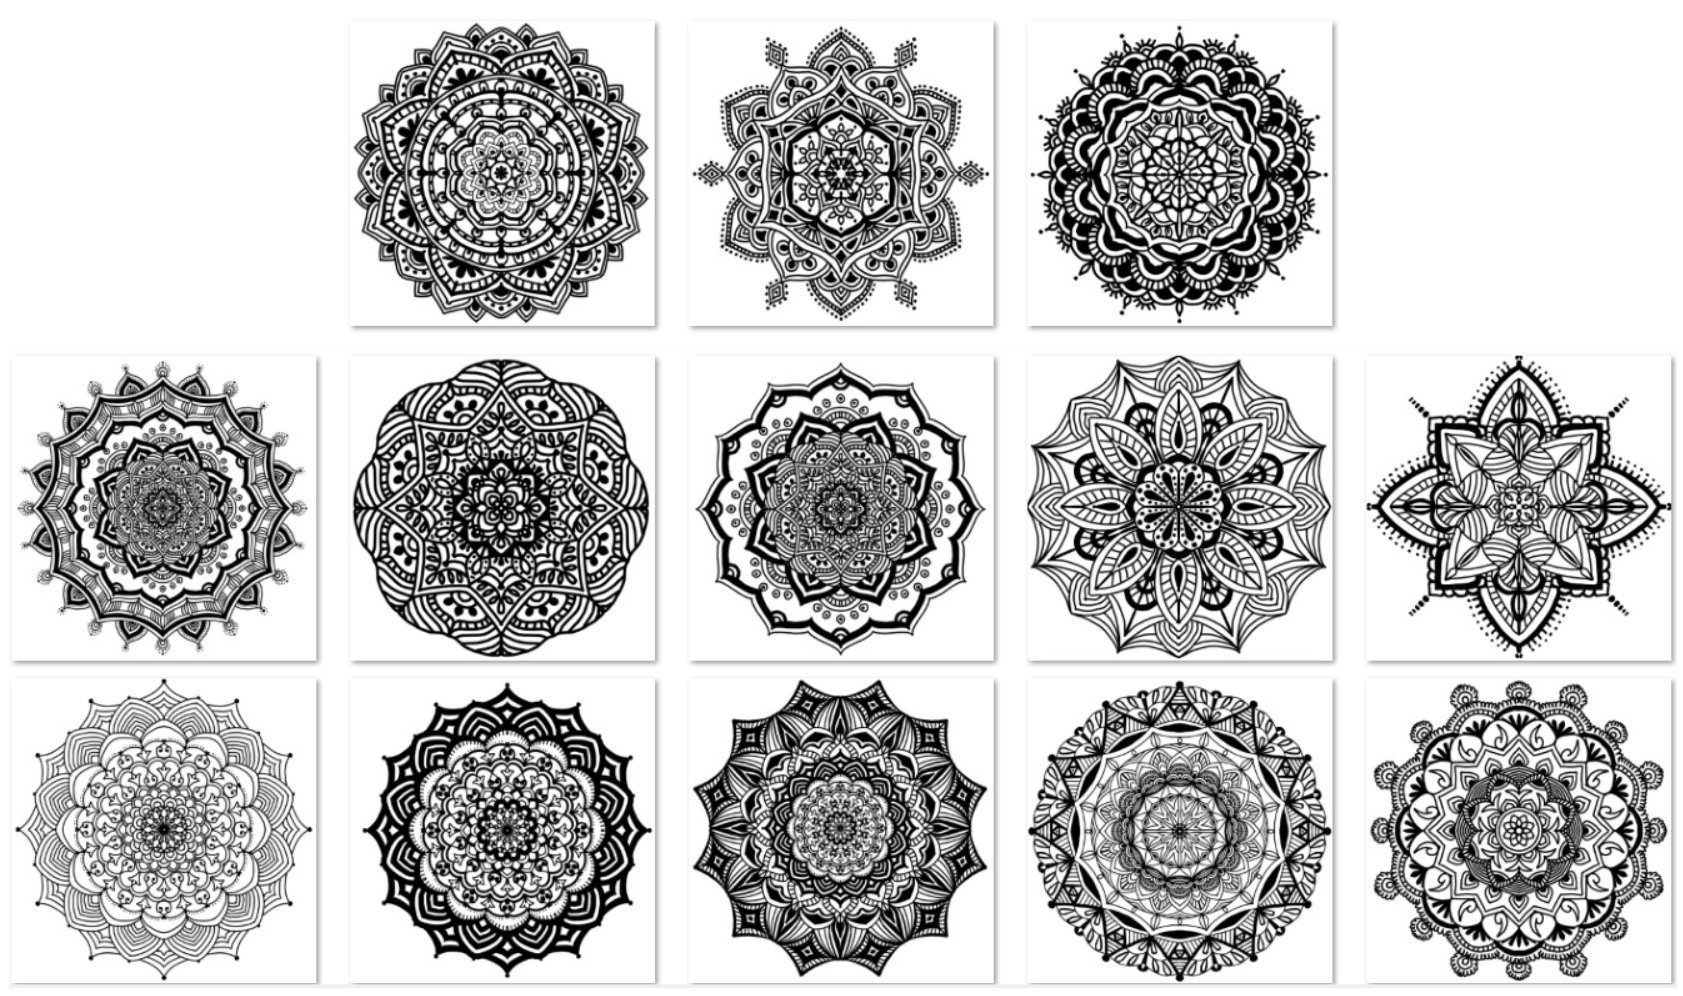 Digital Mandala designs